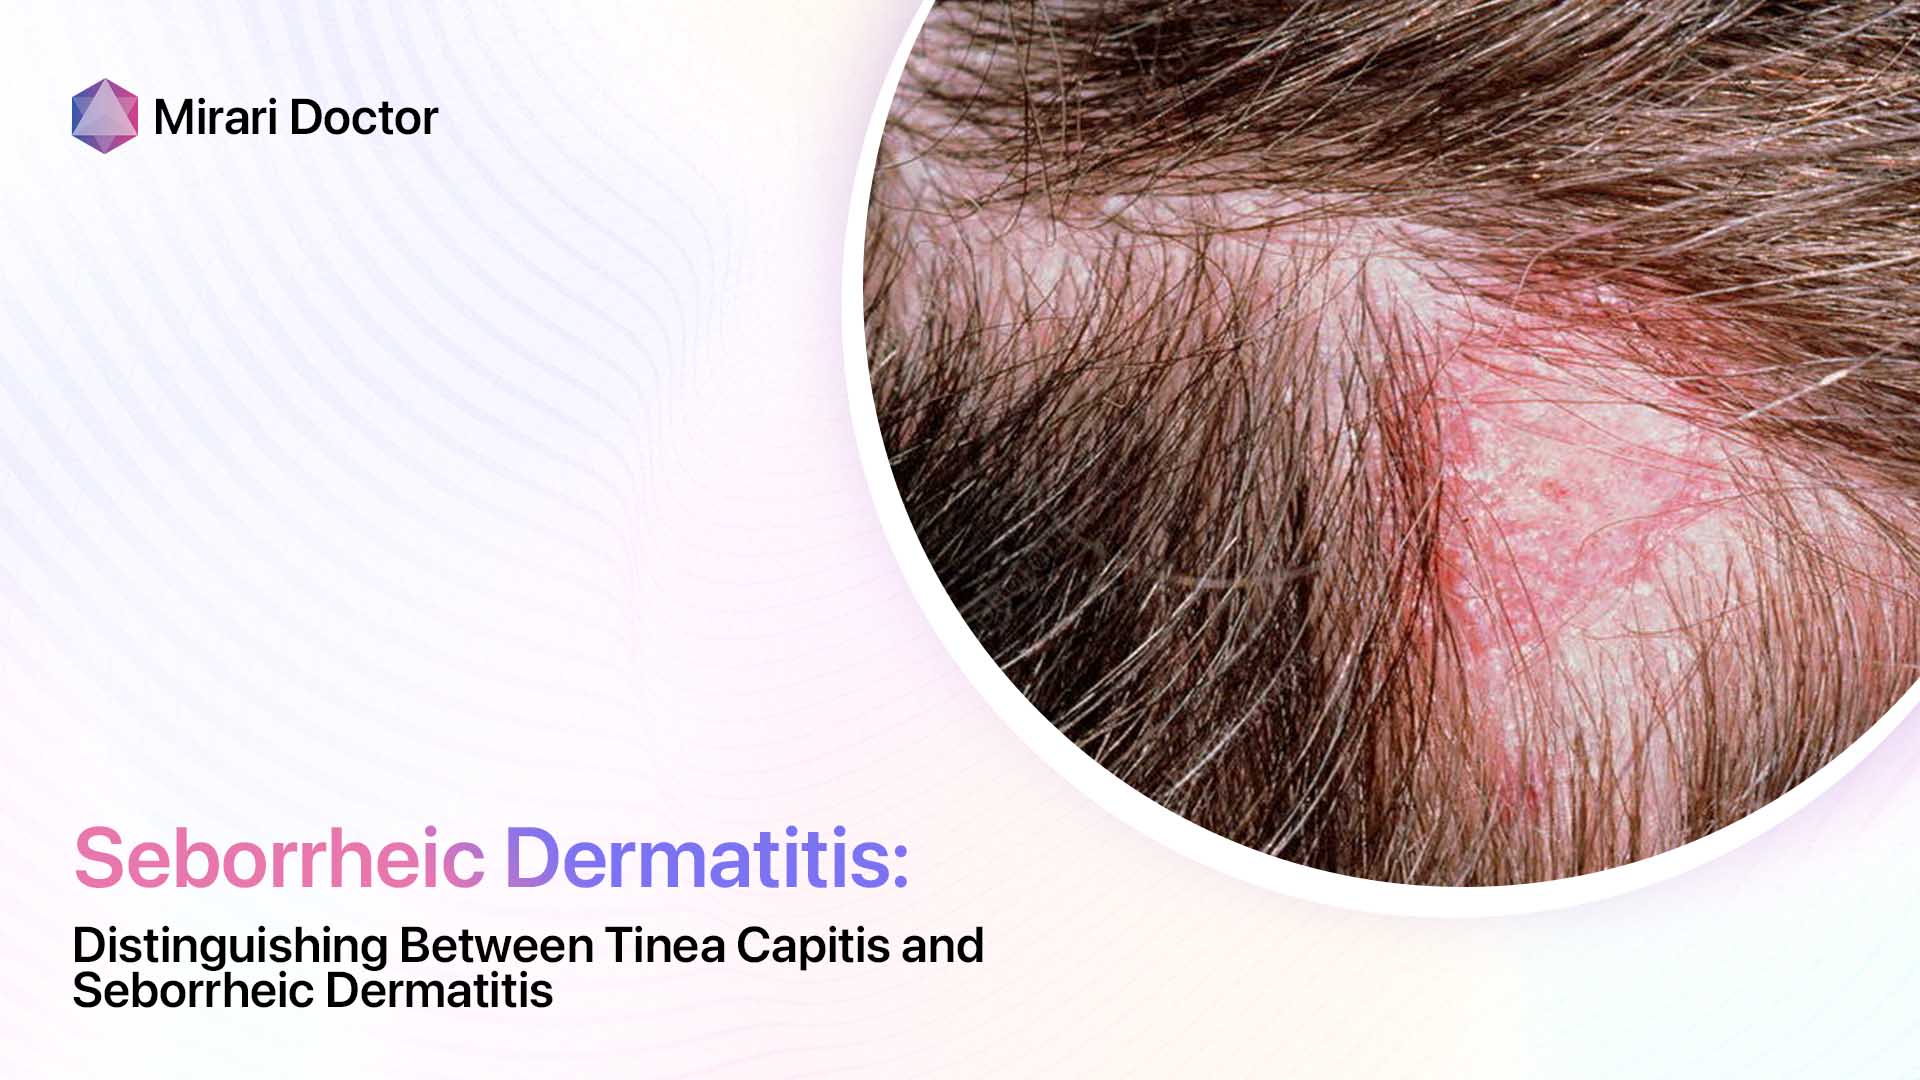 Featured image for “Distinguishing Between Tinea Capitis and Seborrheic Dermatitis”